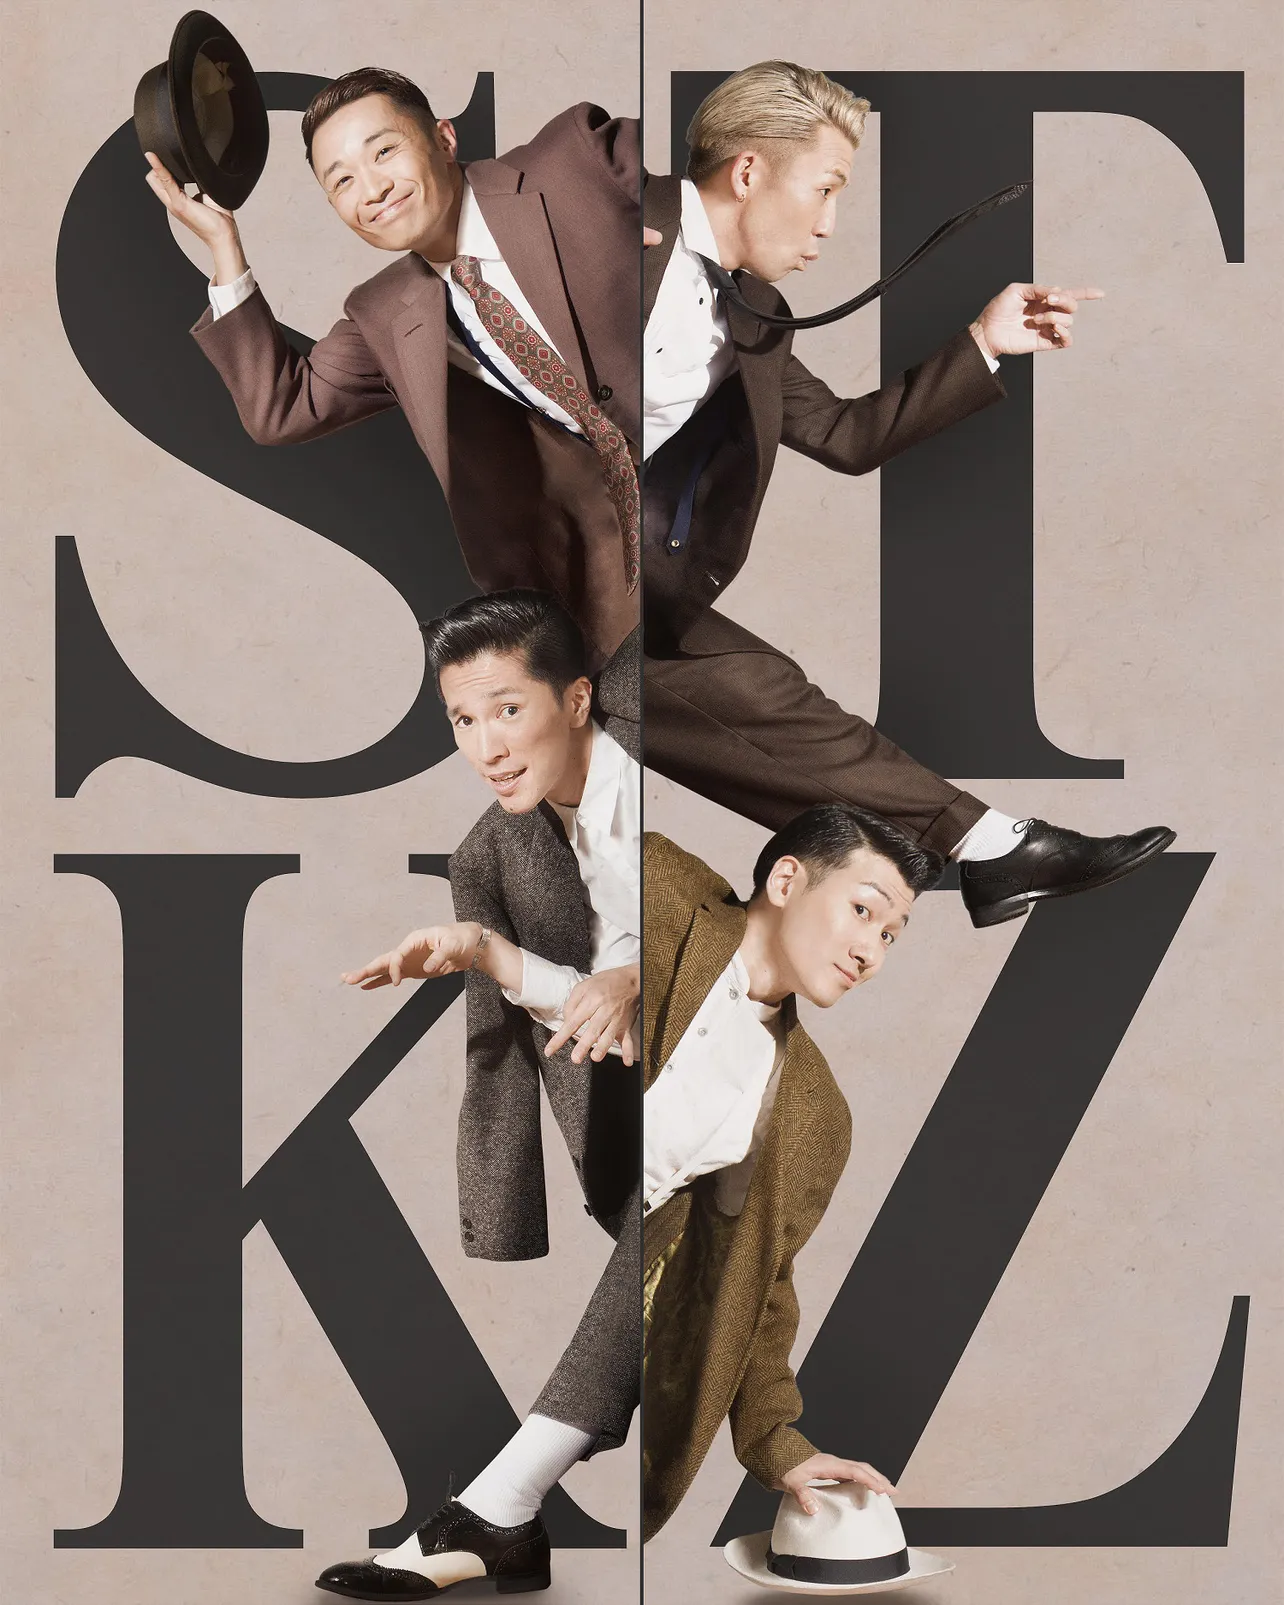 s**t kingz（シットキングス）のメンバー。（写真上段左より）shoji、kazuki（同下段左より）NOPPO、Oguri